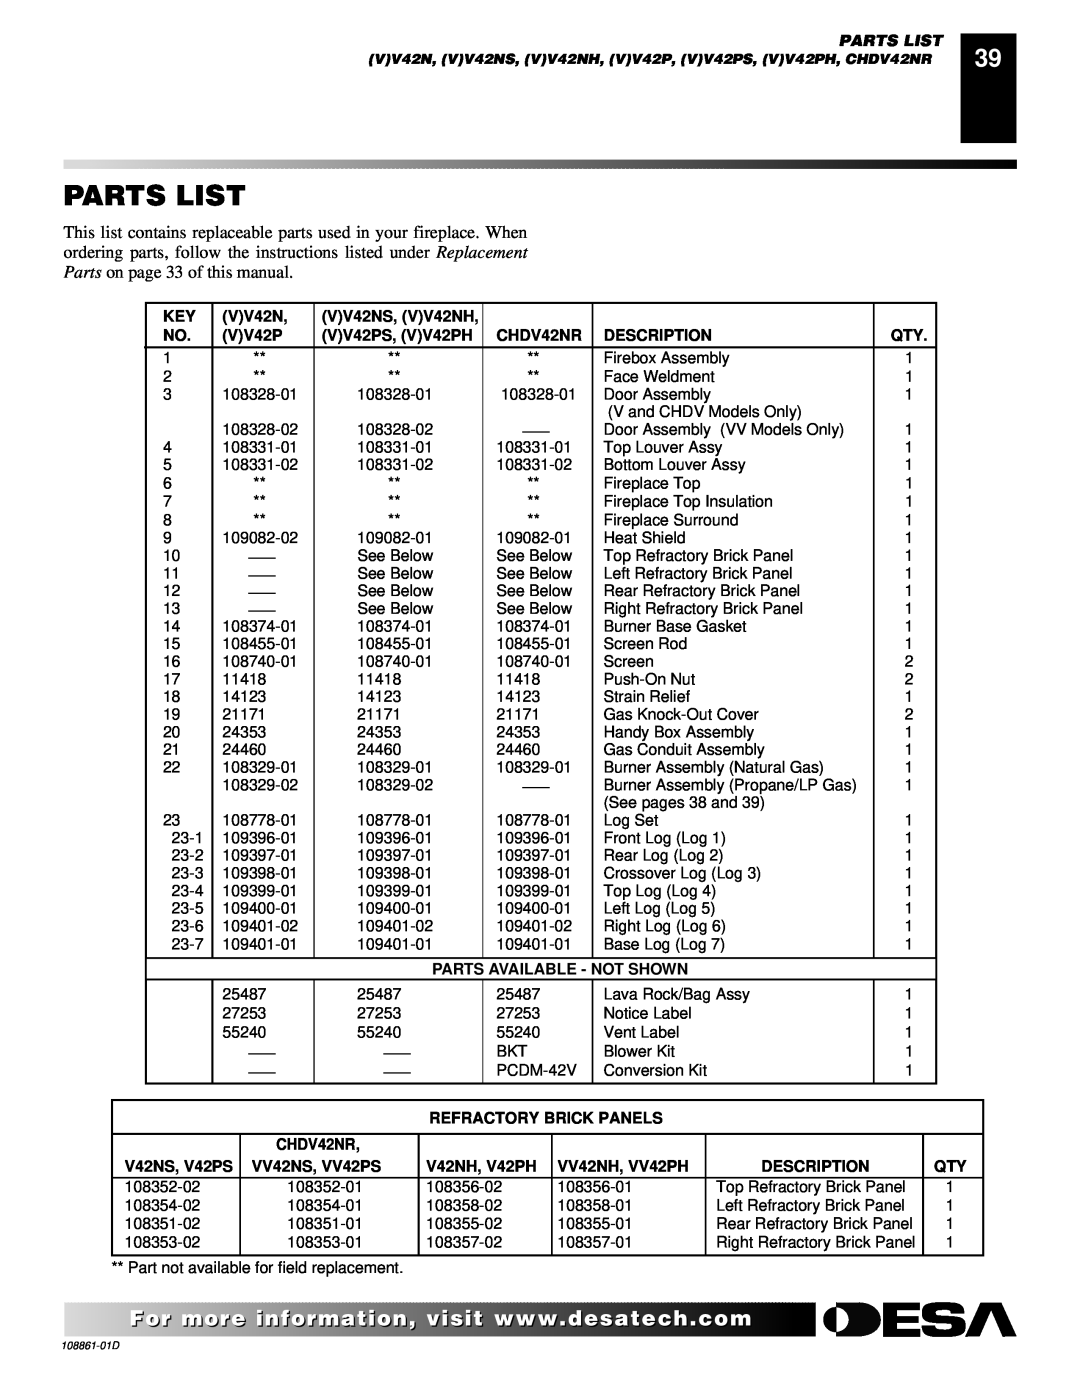 Desa CHDV42NR Parts List, VV42NS, VV42NH, VV42PS, VV42PH, Description, Parts Available - Not Shown, V42NS, V42PS 